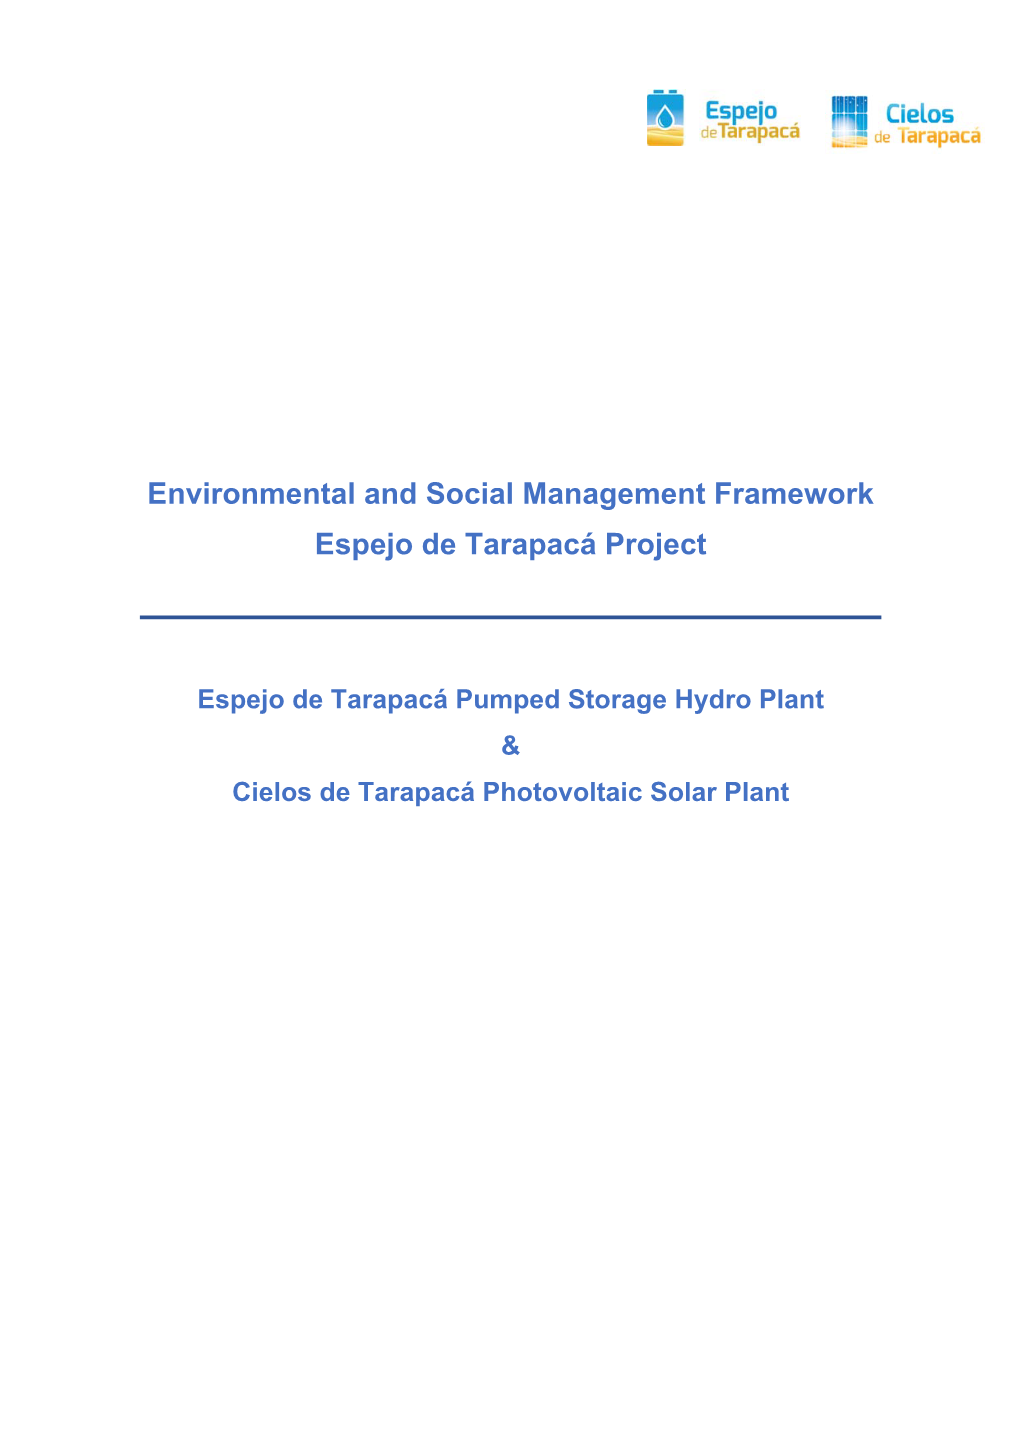 Environmental and Social Management Framework (ESMF